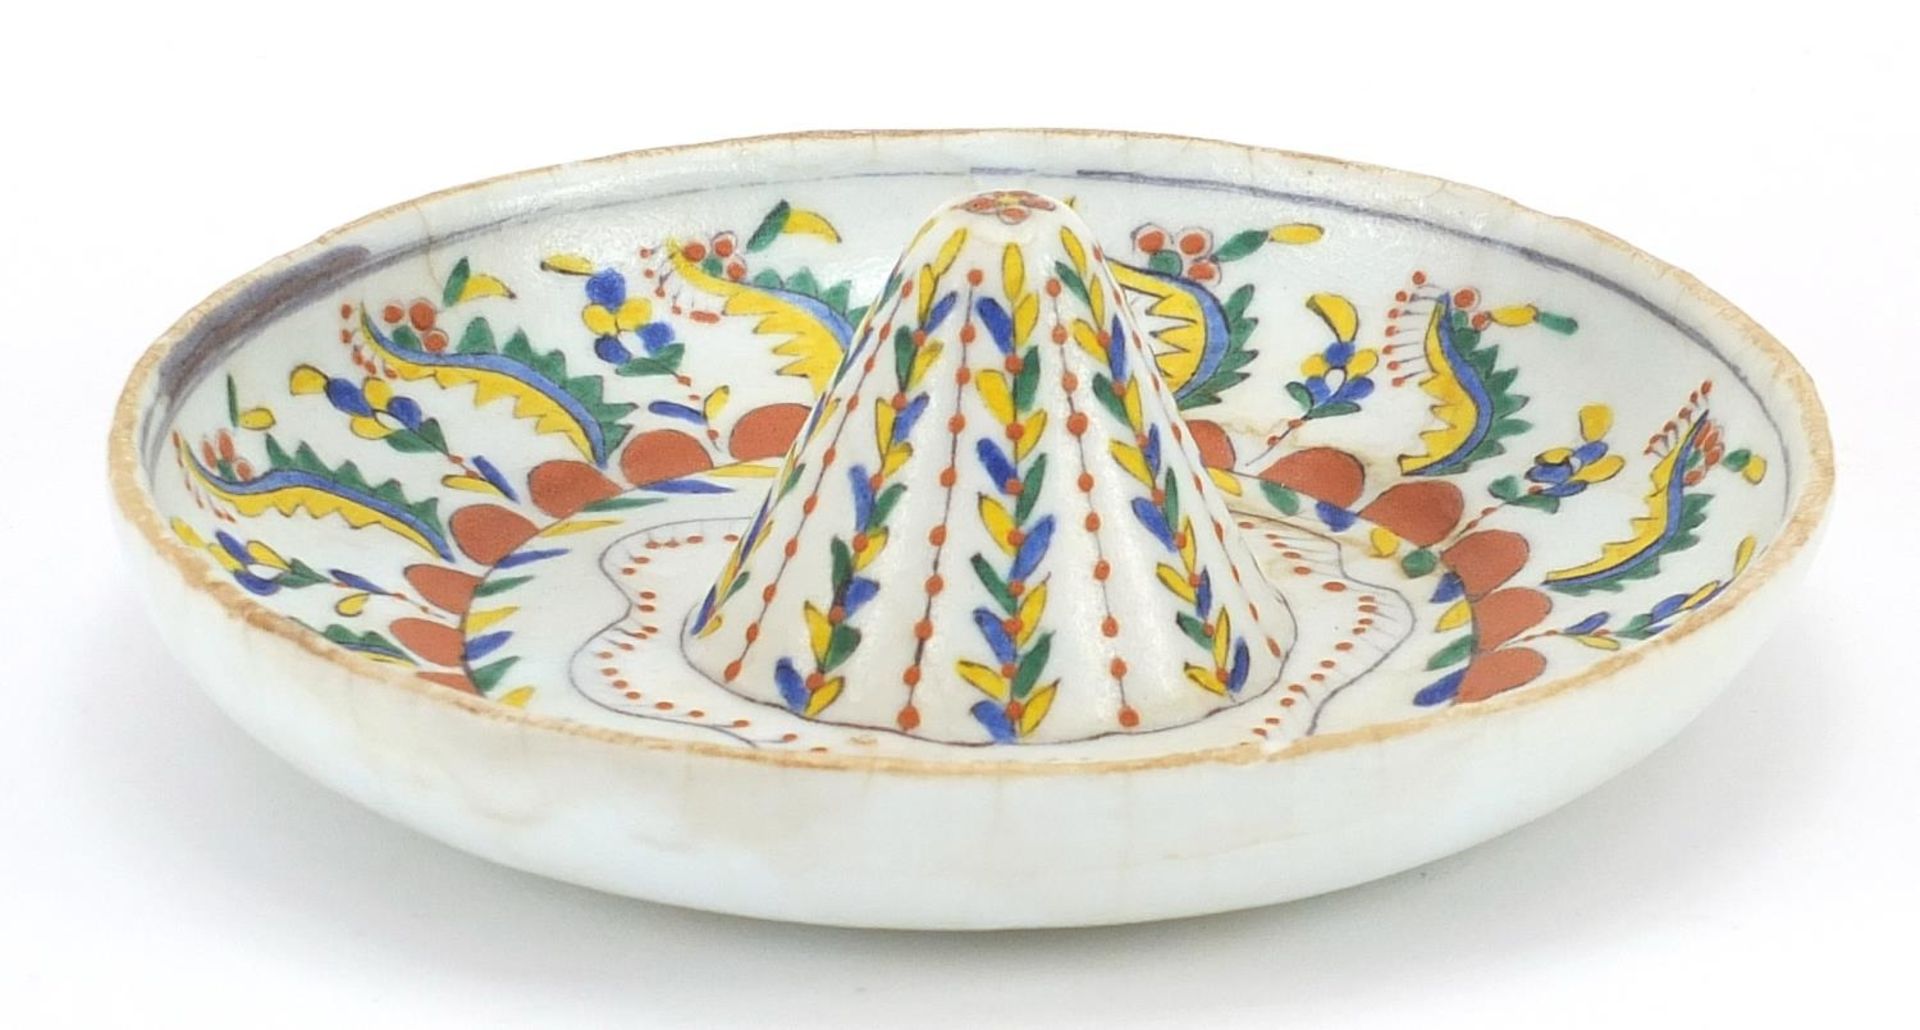 Turkish Kutahya pottery lemon squeezer, 18cm in diameter